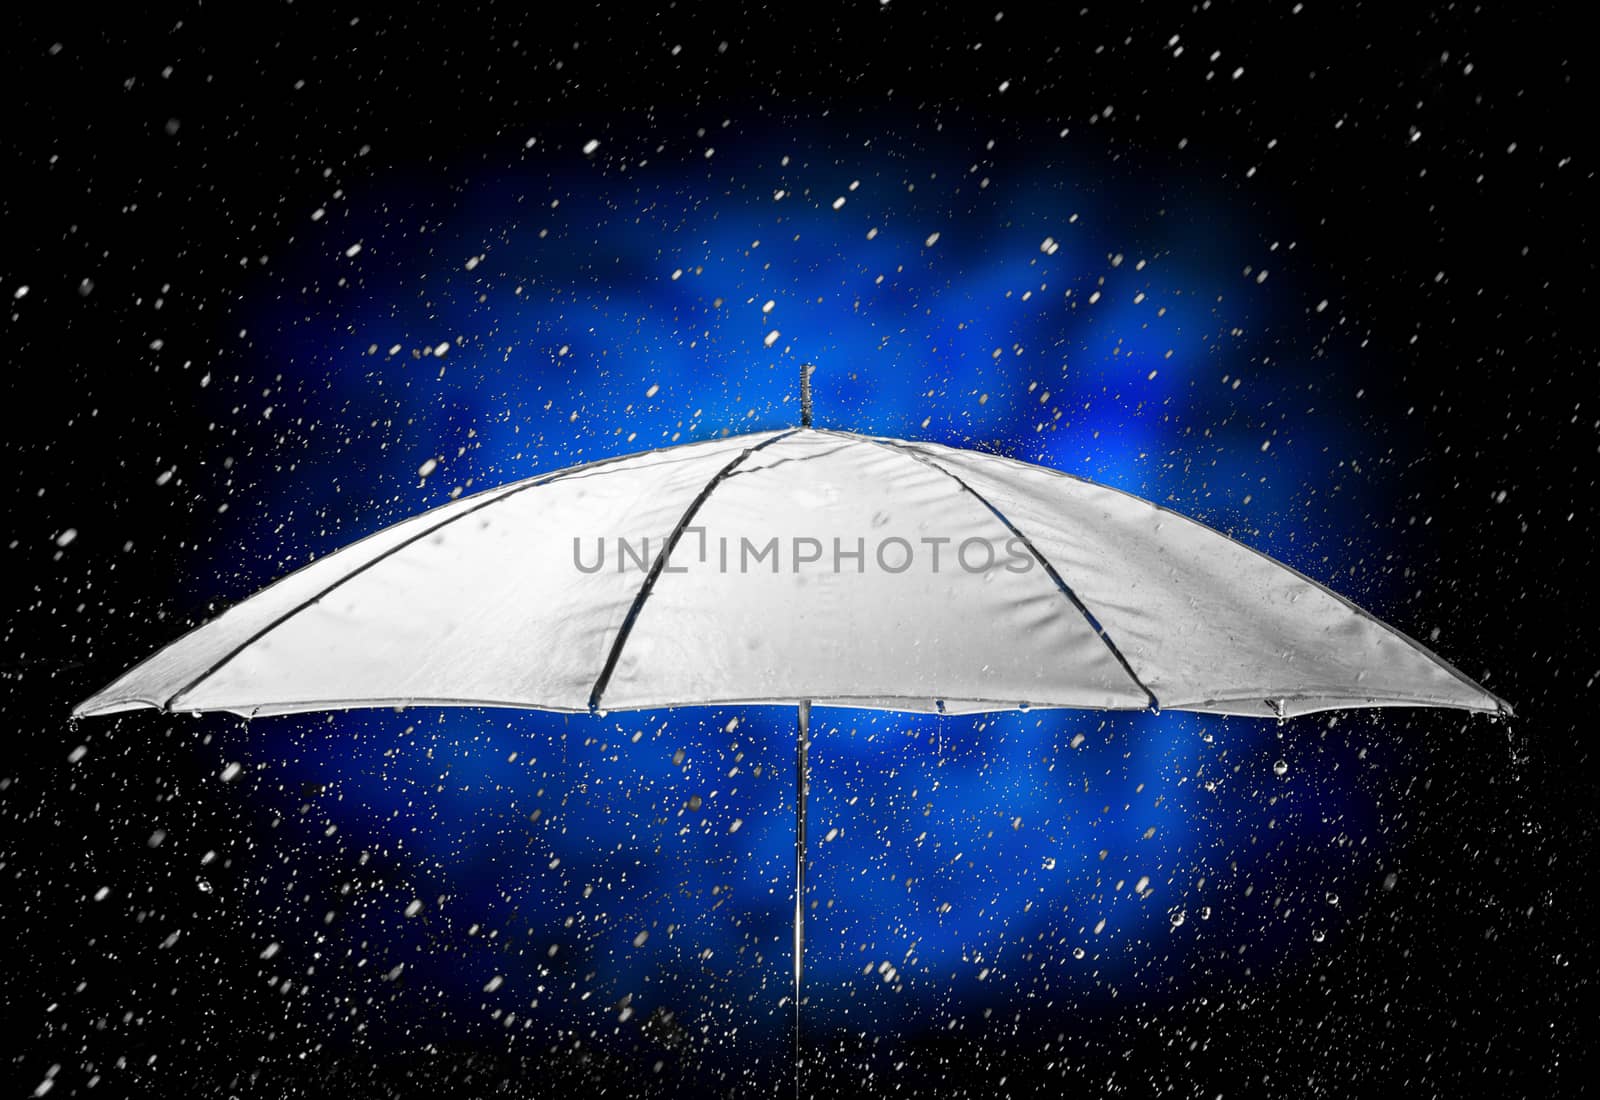 Umbrella under raindrops by Garsya